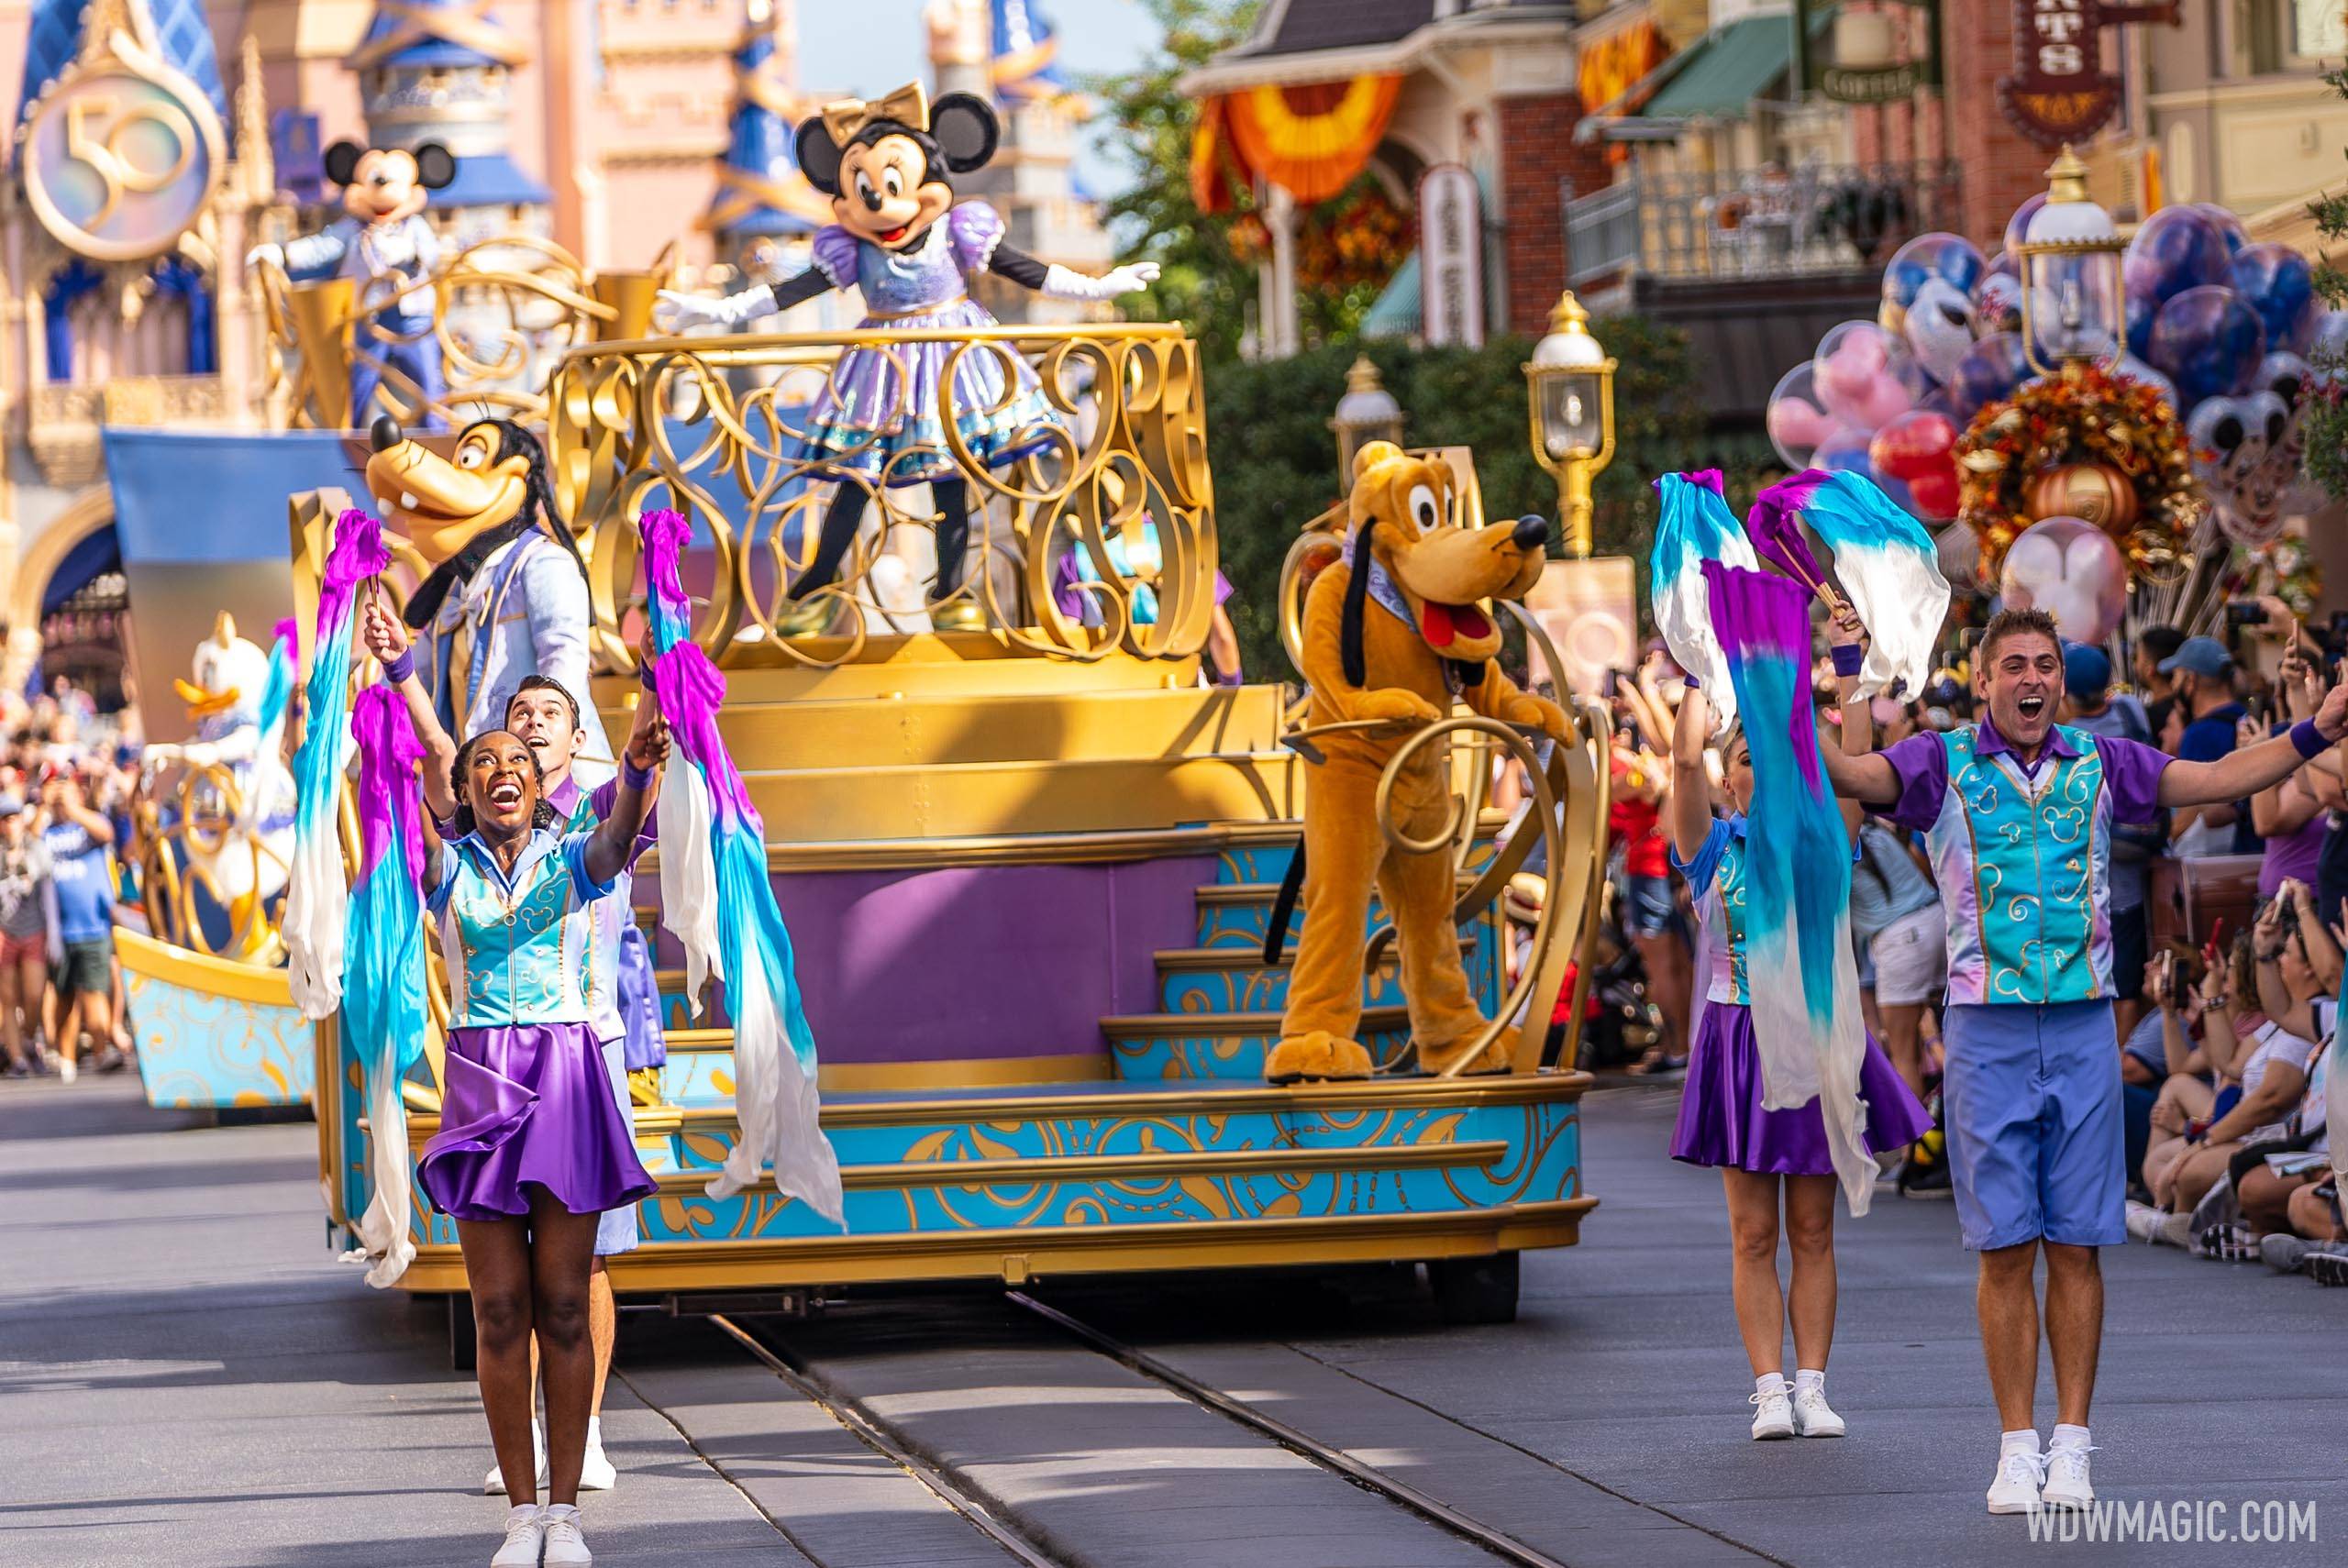 First look at the new 50th Anniversary Mickey's Celebration Cavalcade at Magic Kingdom